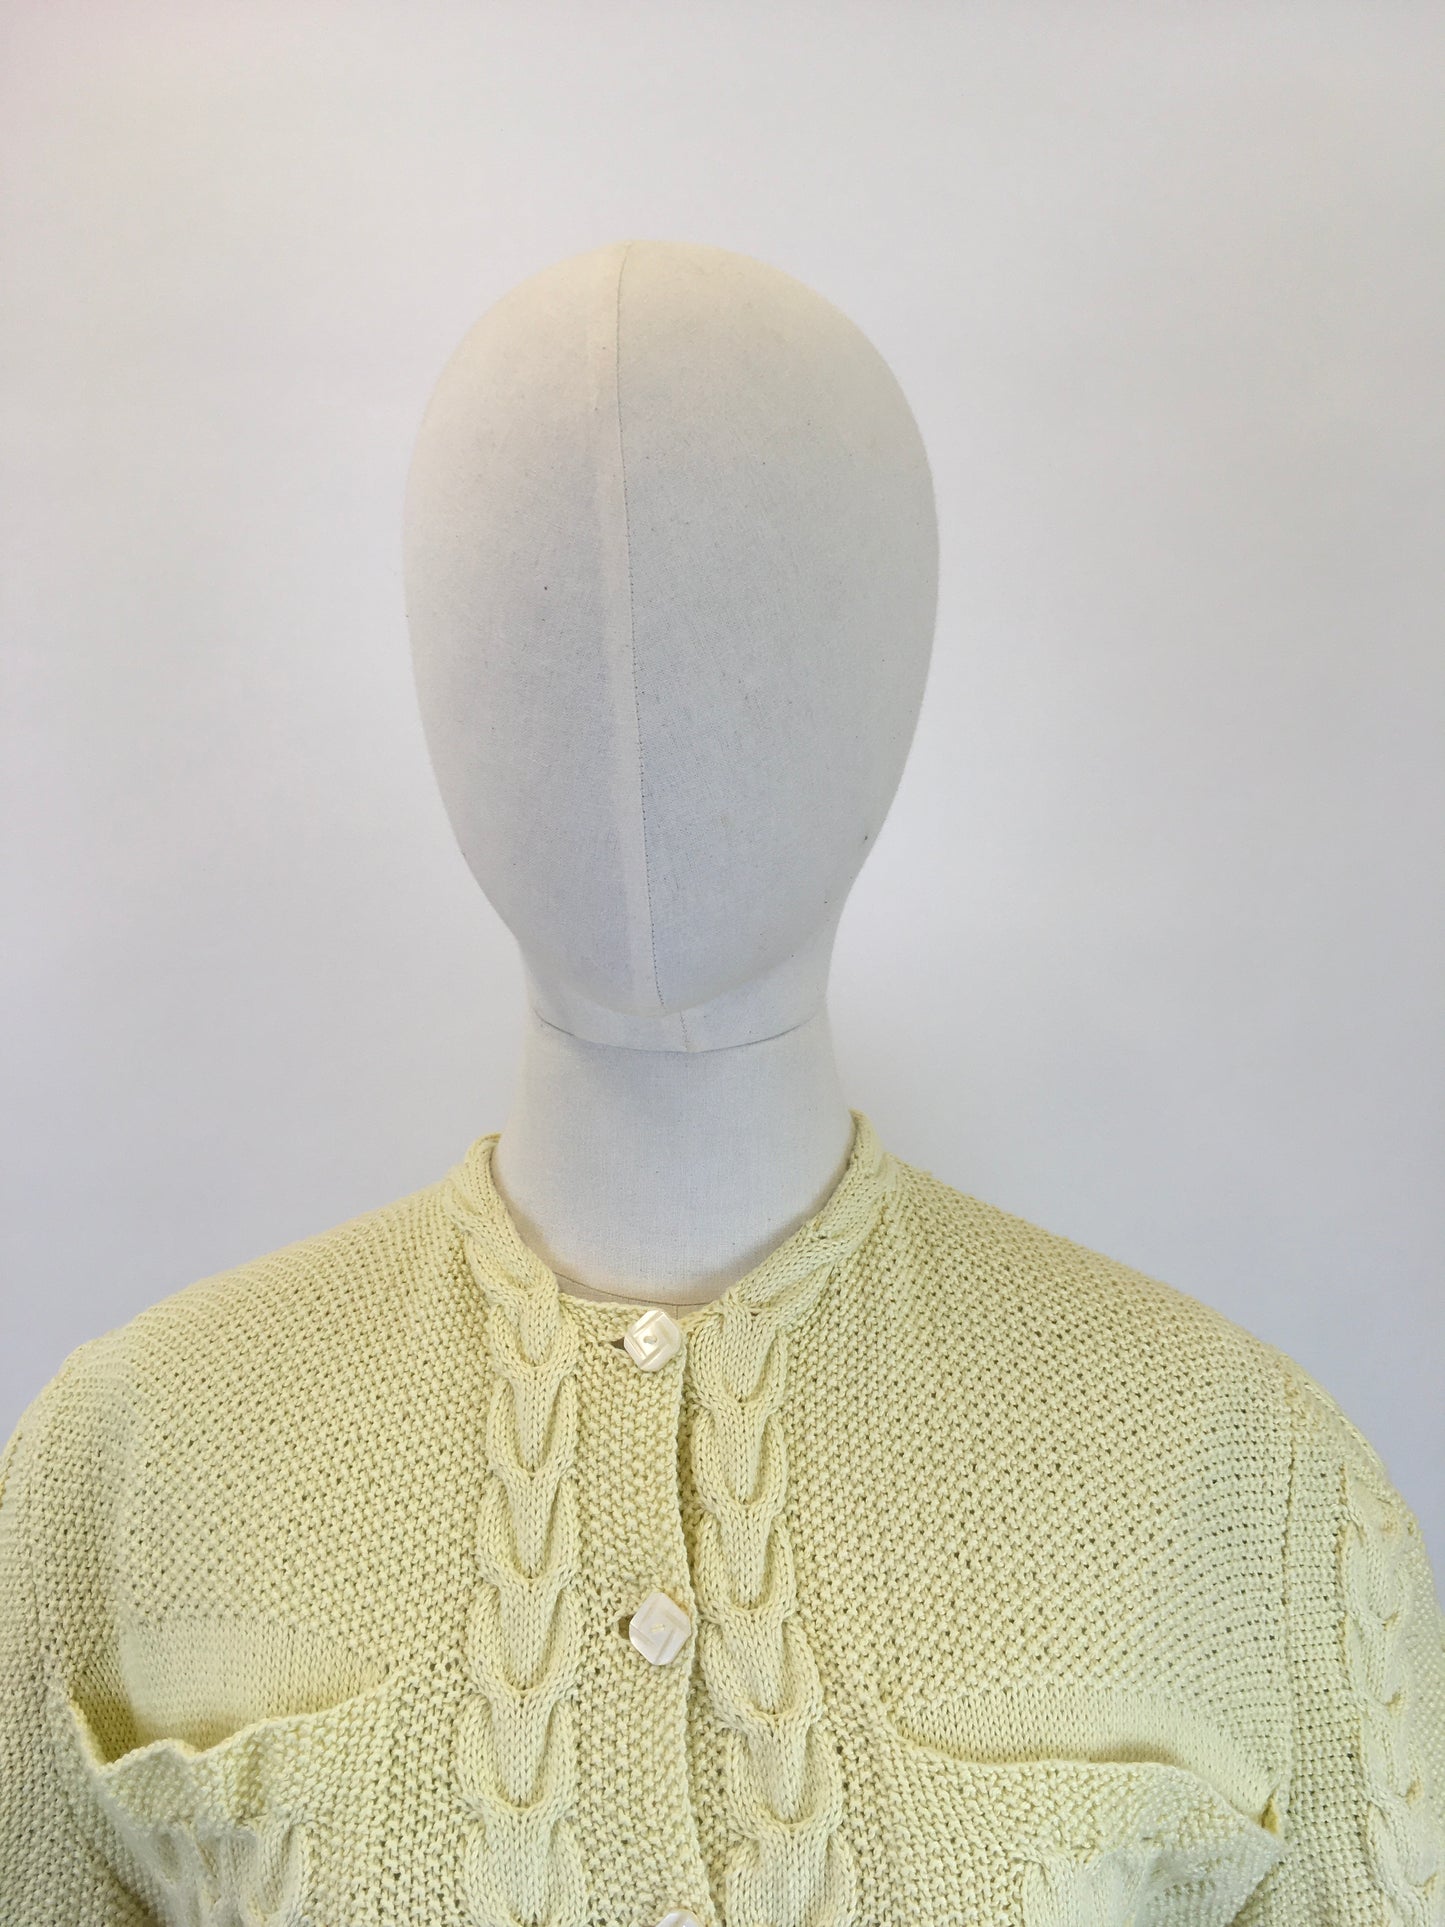 1940’s style Stunning Knitted Cardigan in Soft Lemon - Amazing Back Panel Detailing